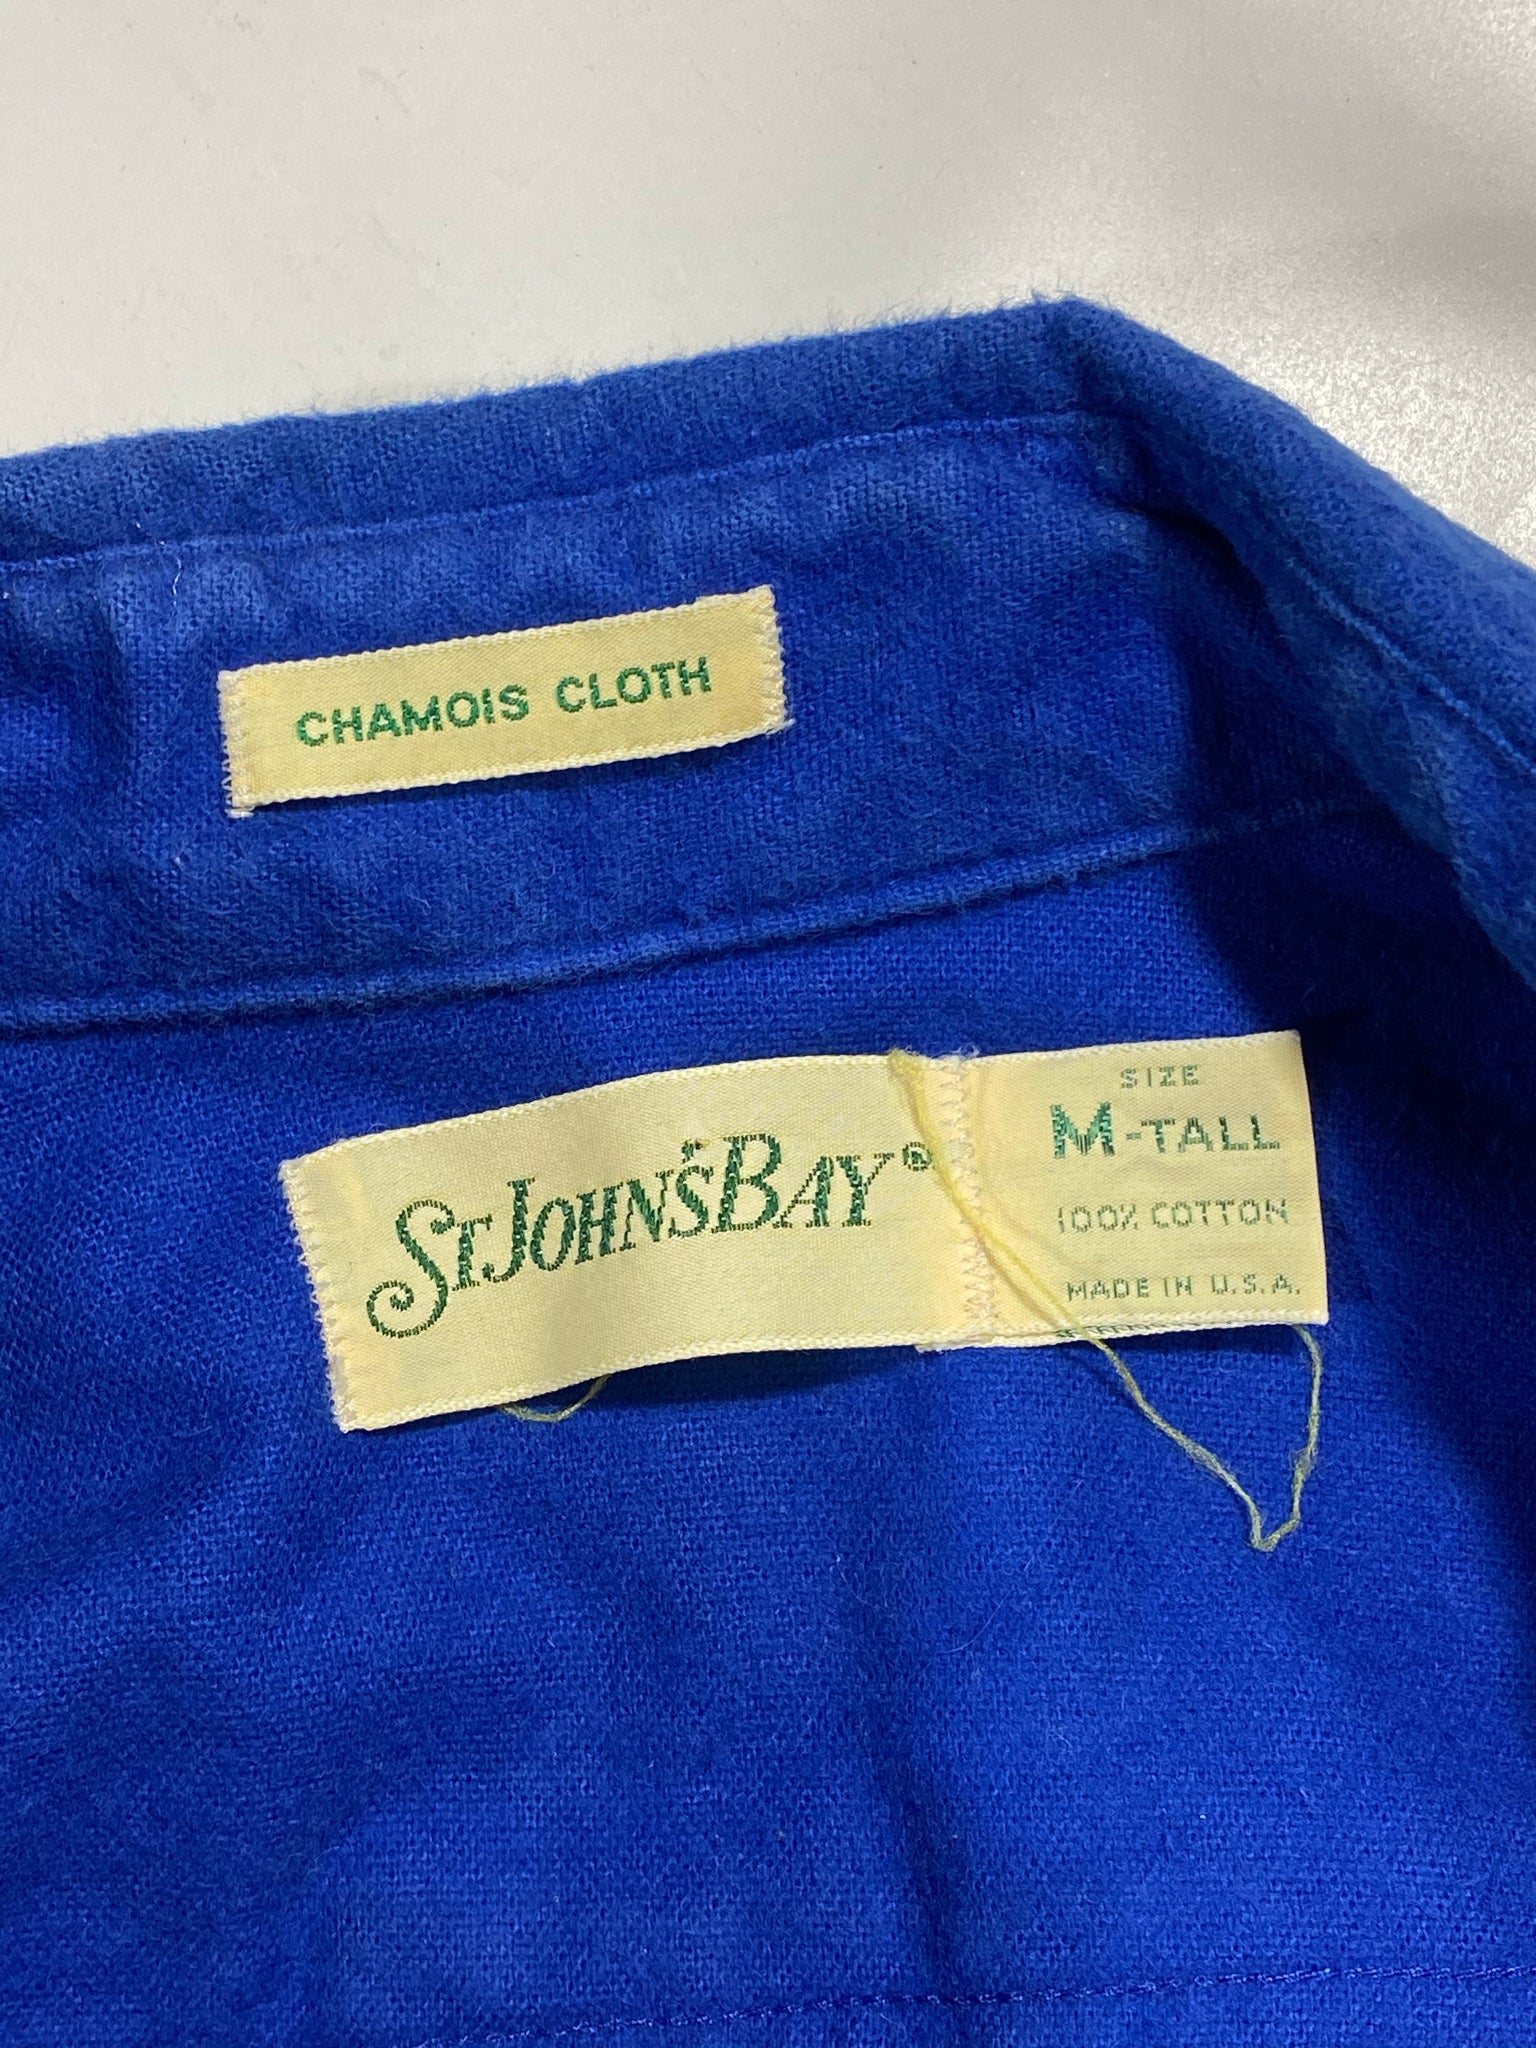 St. john’s bay chamois shirt medium and medium tall